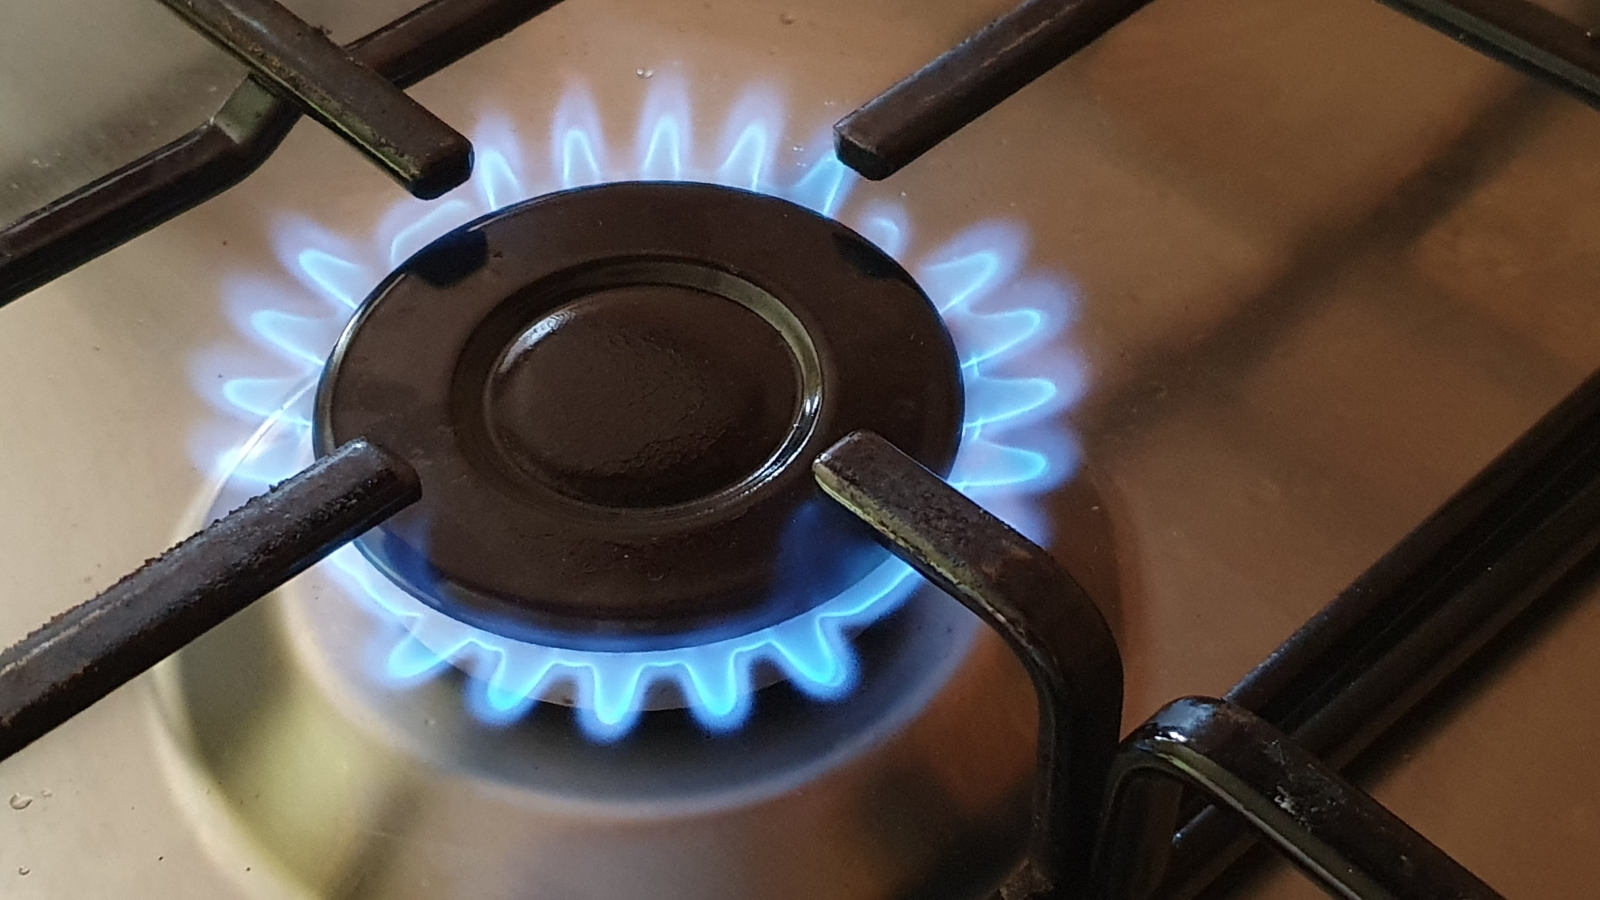 lit burner on gas stove